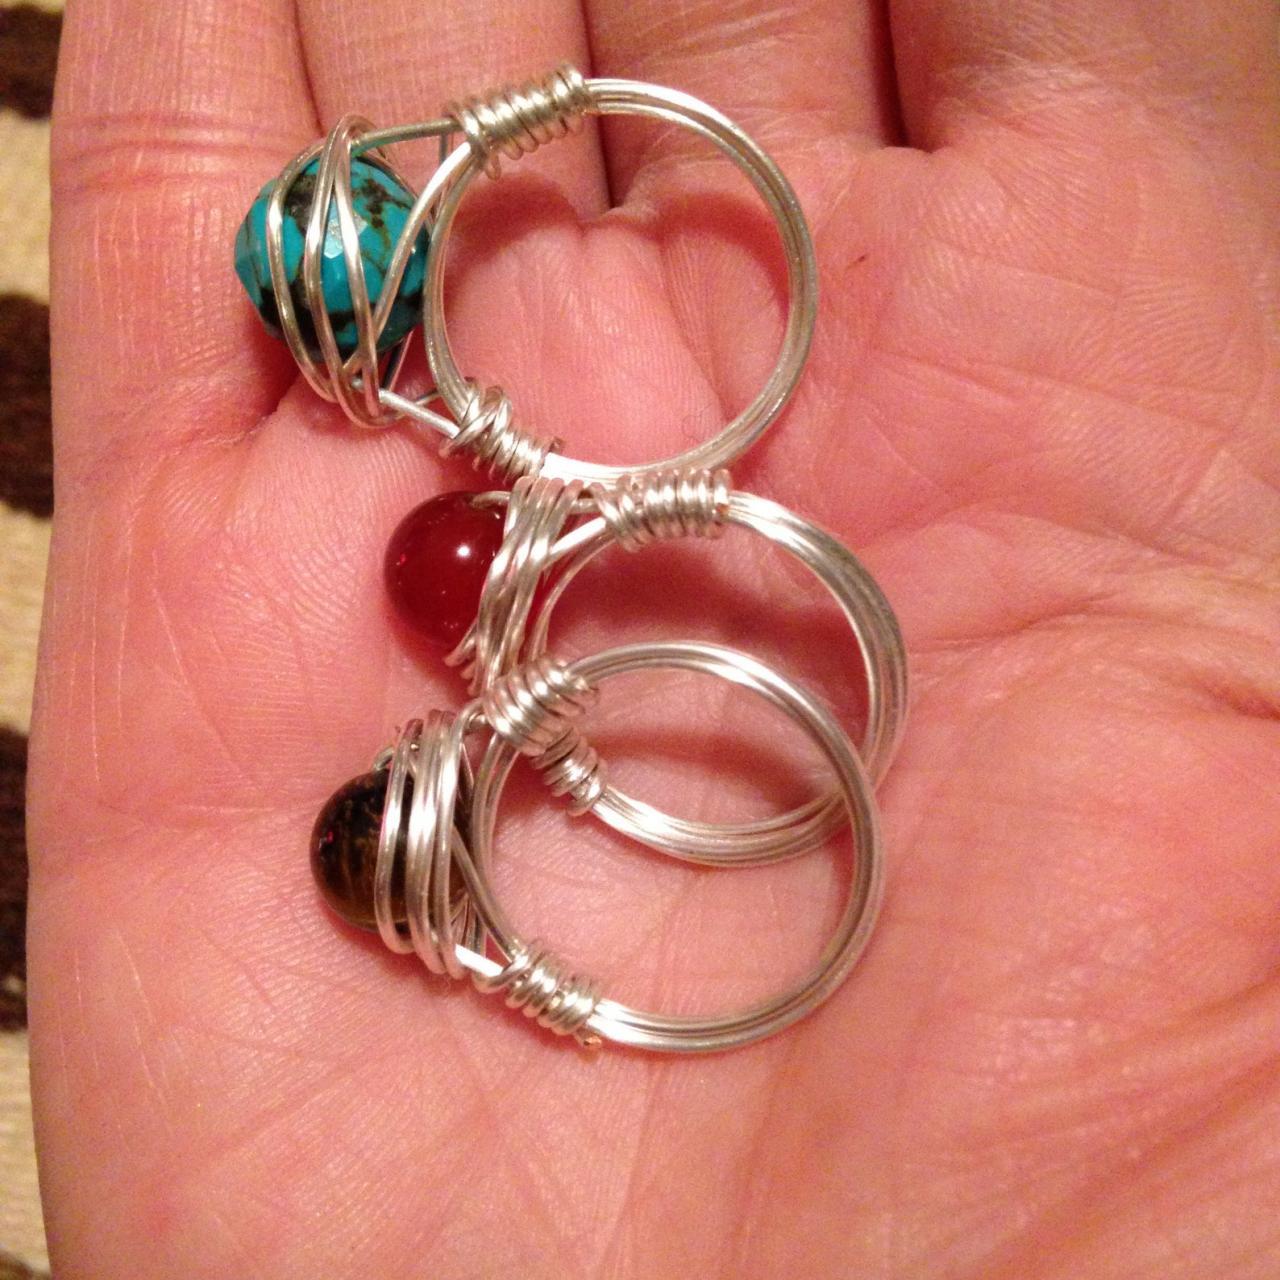 Gemstone wire wrap rings